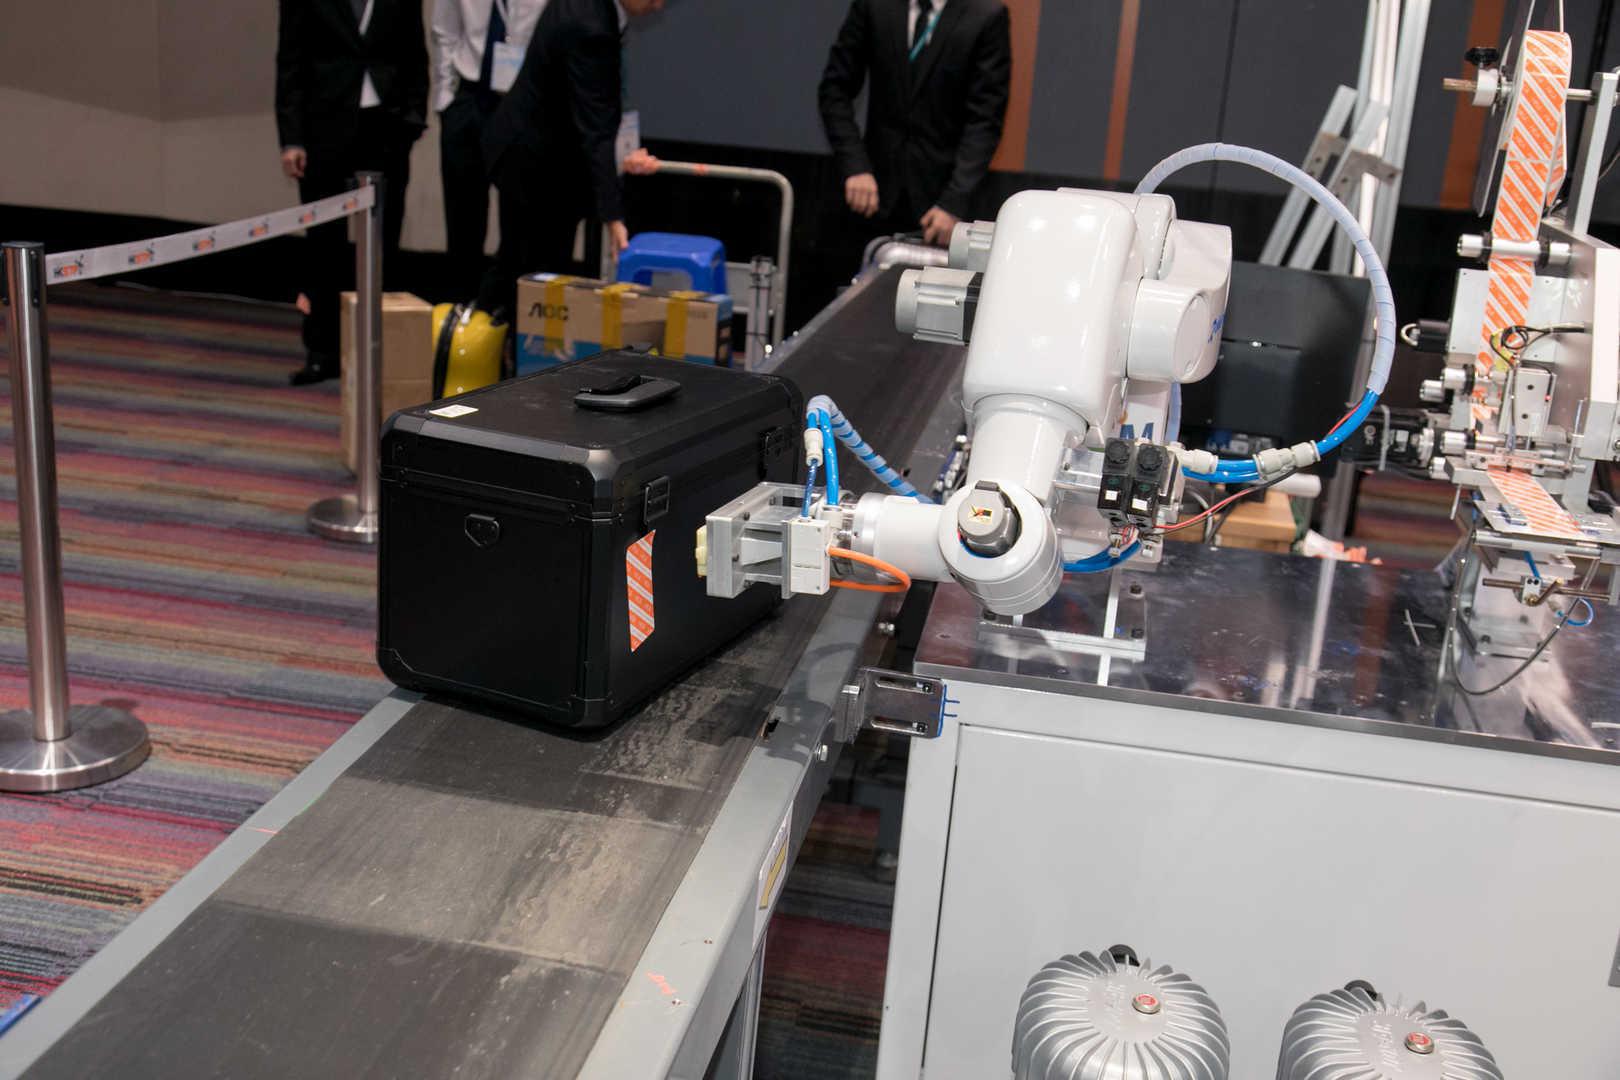 Smart Robot Hand and Eye Co-ordination Enabling Technologies